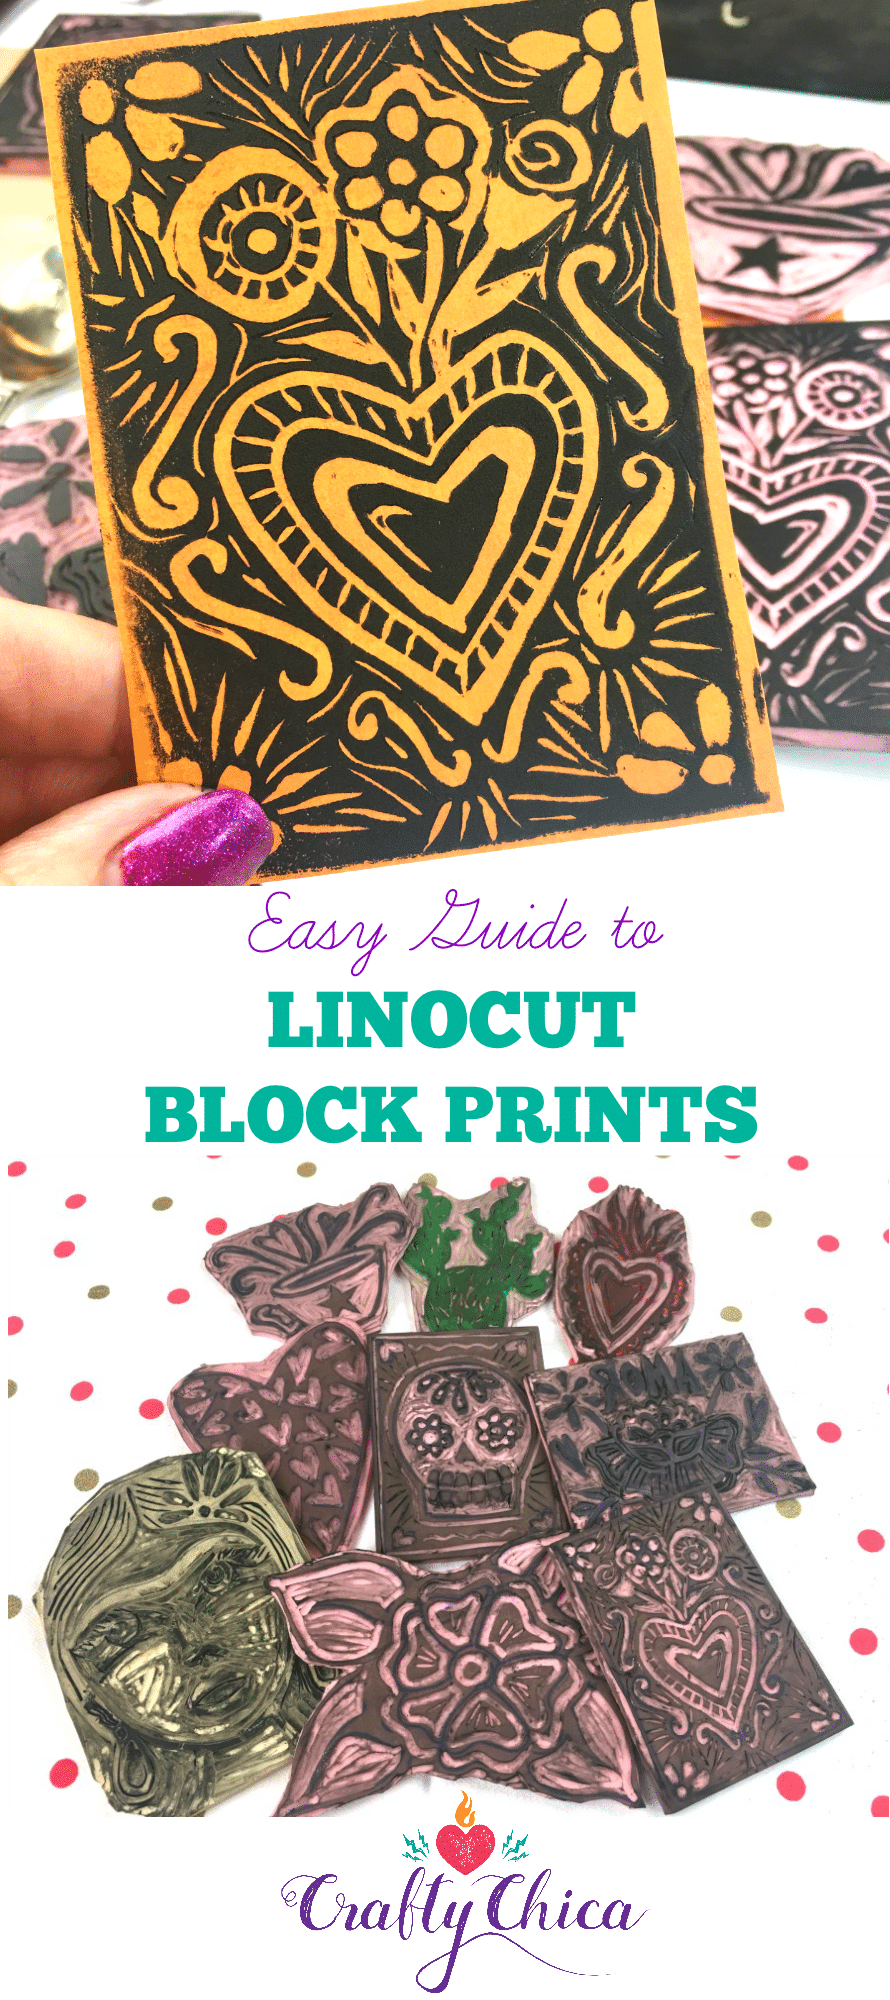 VIDEO: Linocut & Block Printing Tutorial - The Crafty Chica